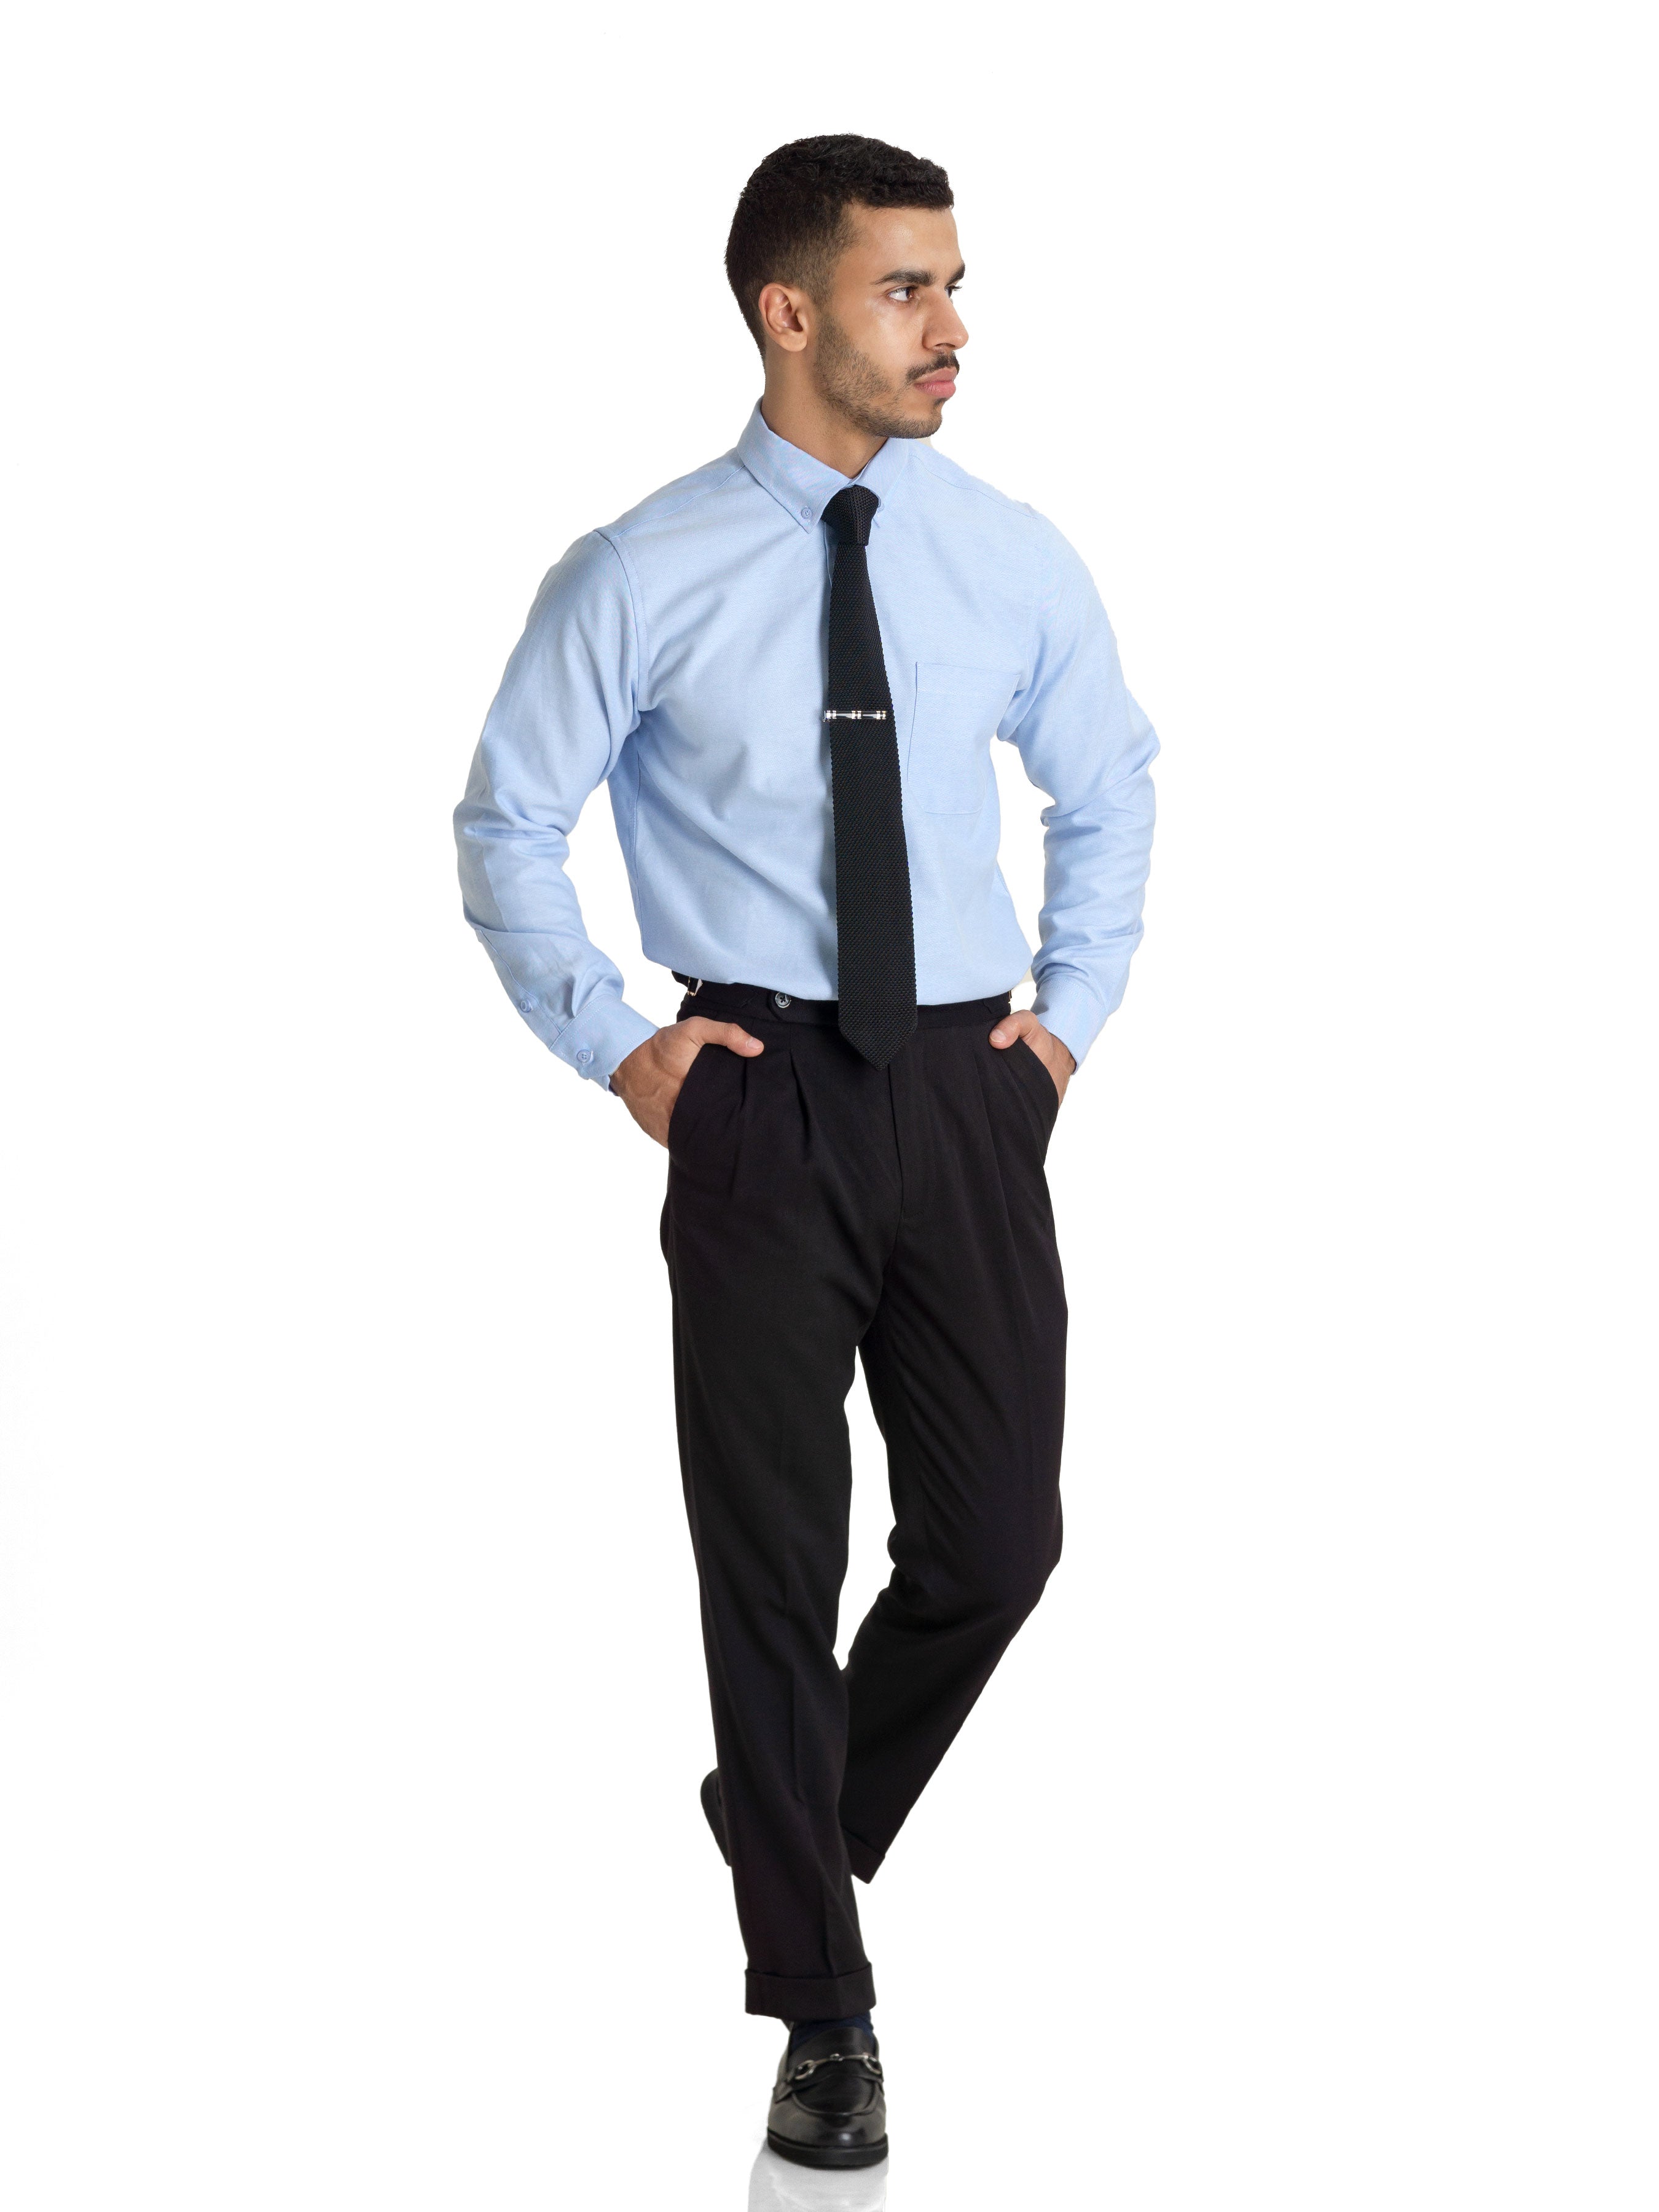 Formal Shirt - Light Blue Oxford Button-Down Collar - Zeve Shoes